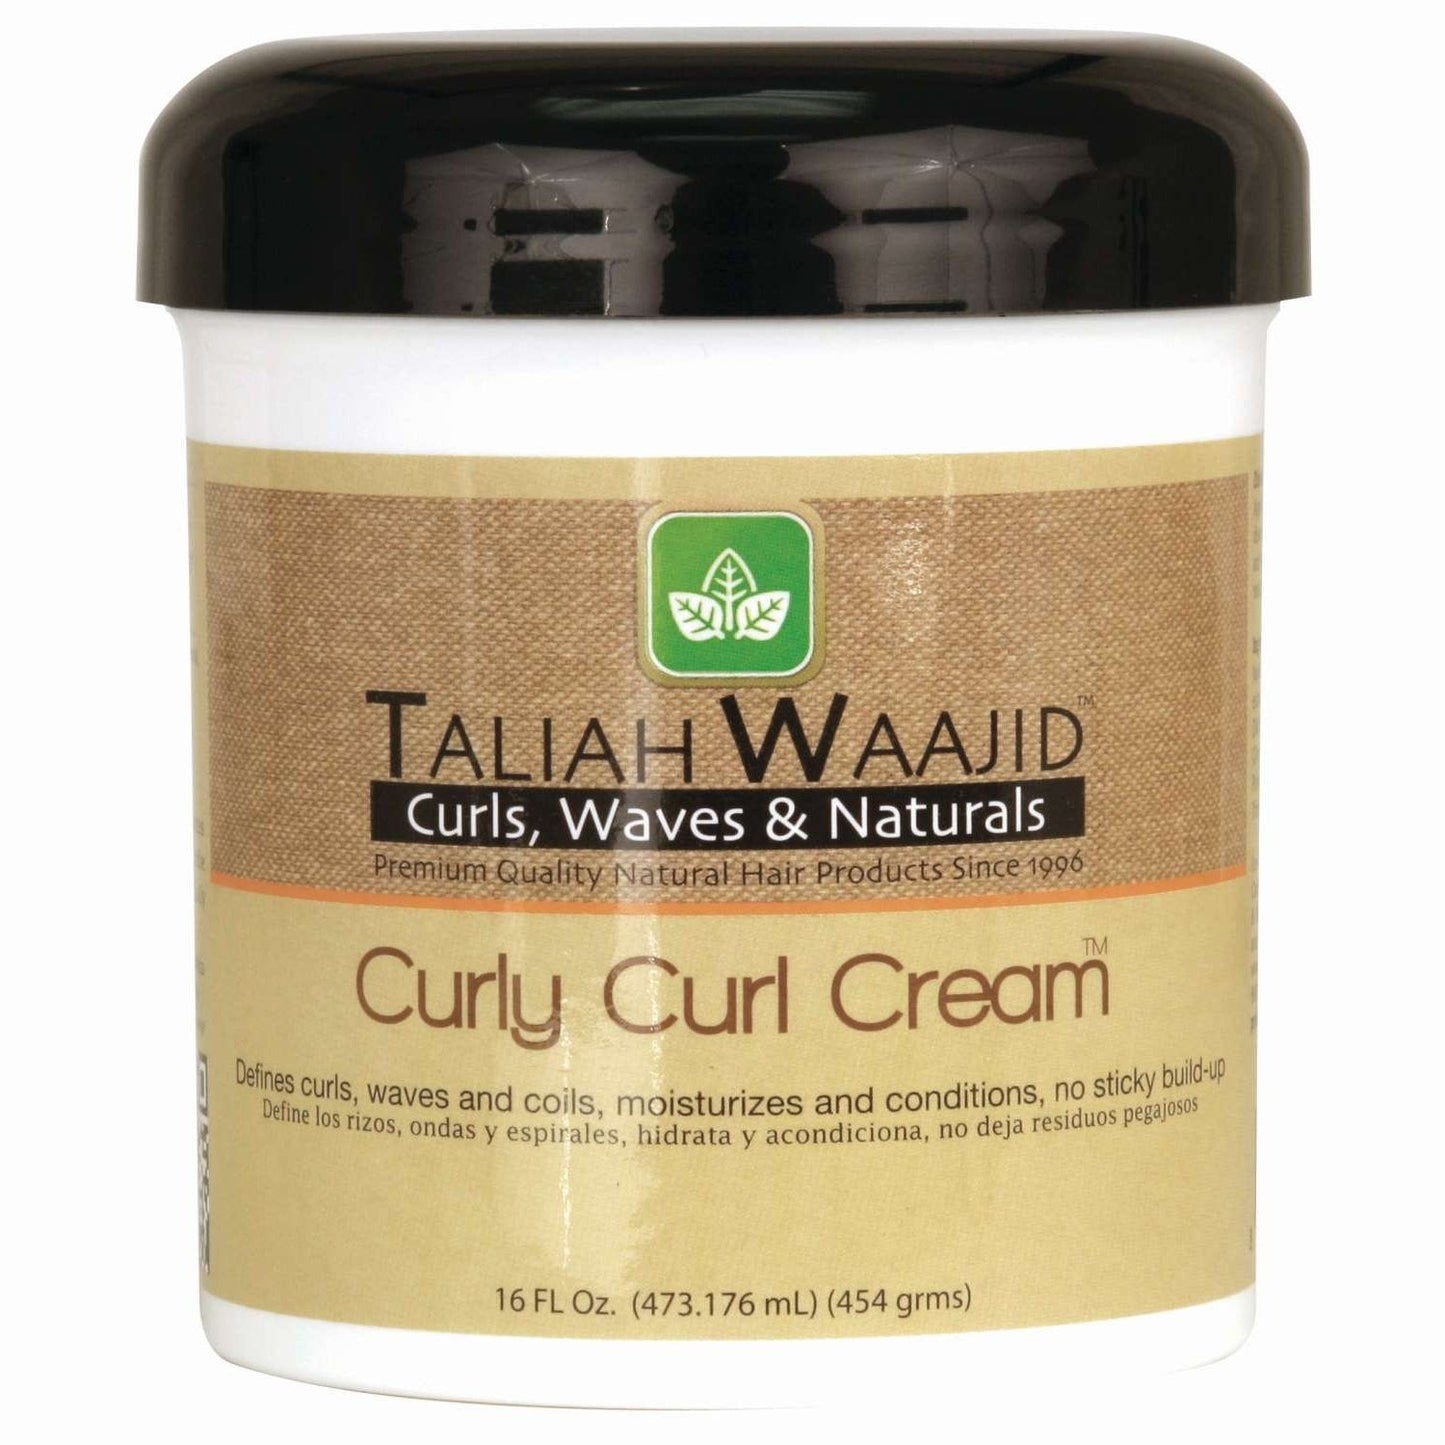 Taliah Waajid Curly Curl Cream 16 Oz